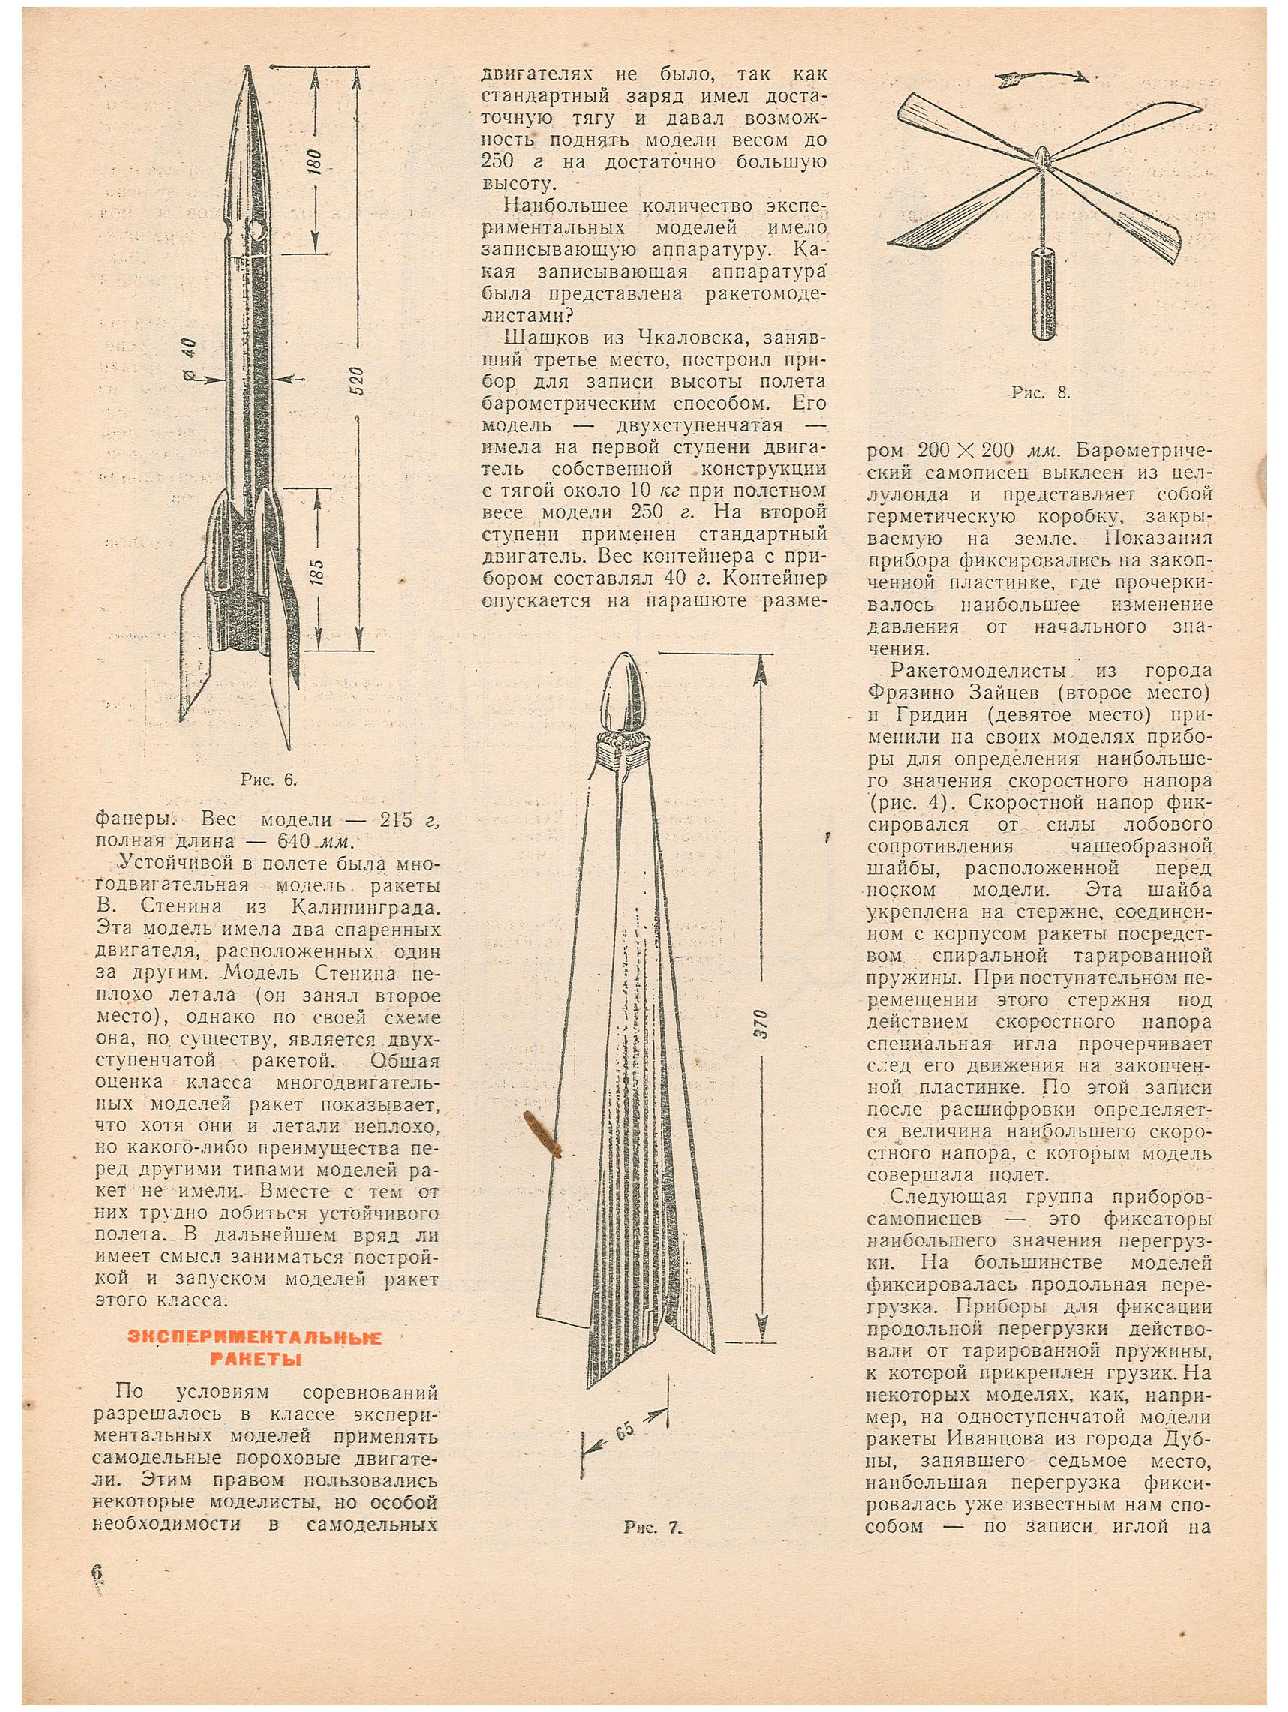 ЮМК 7, 1964, 6 c.